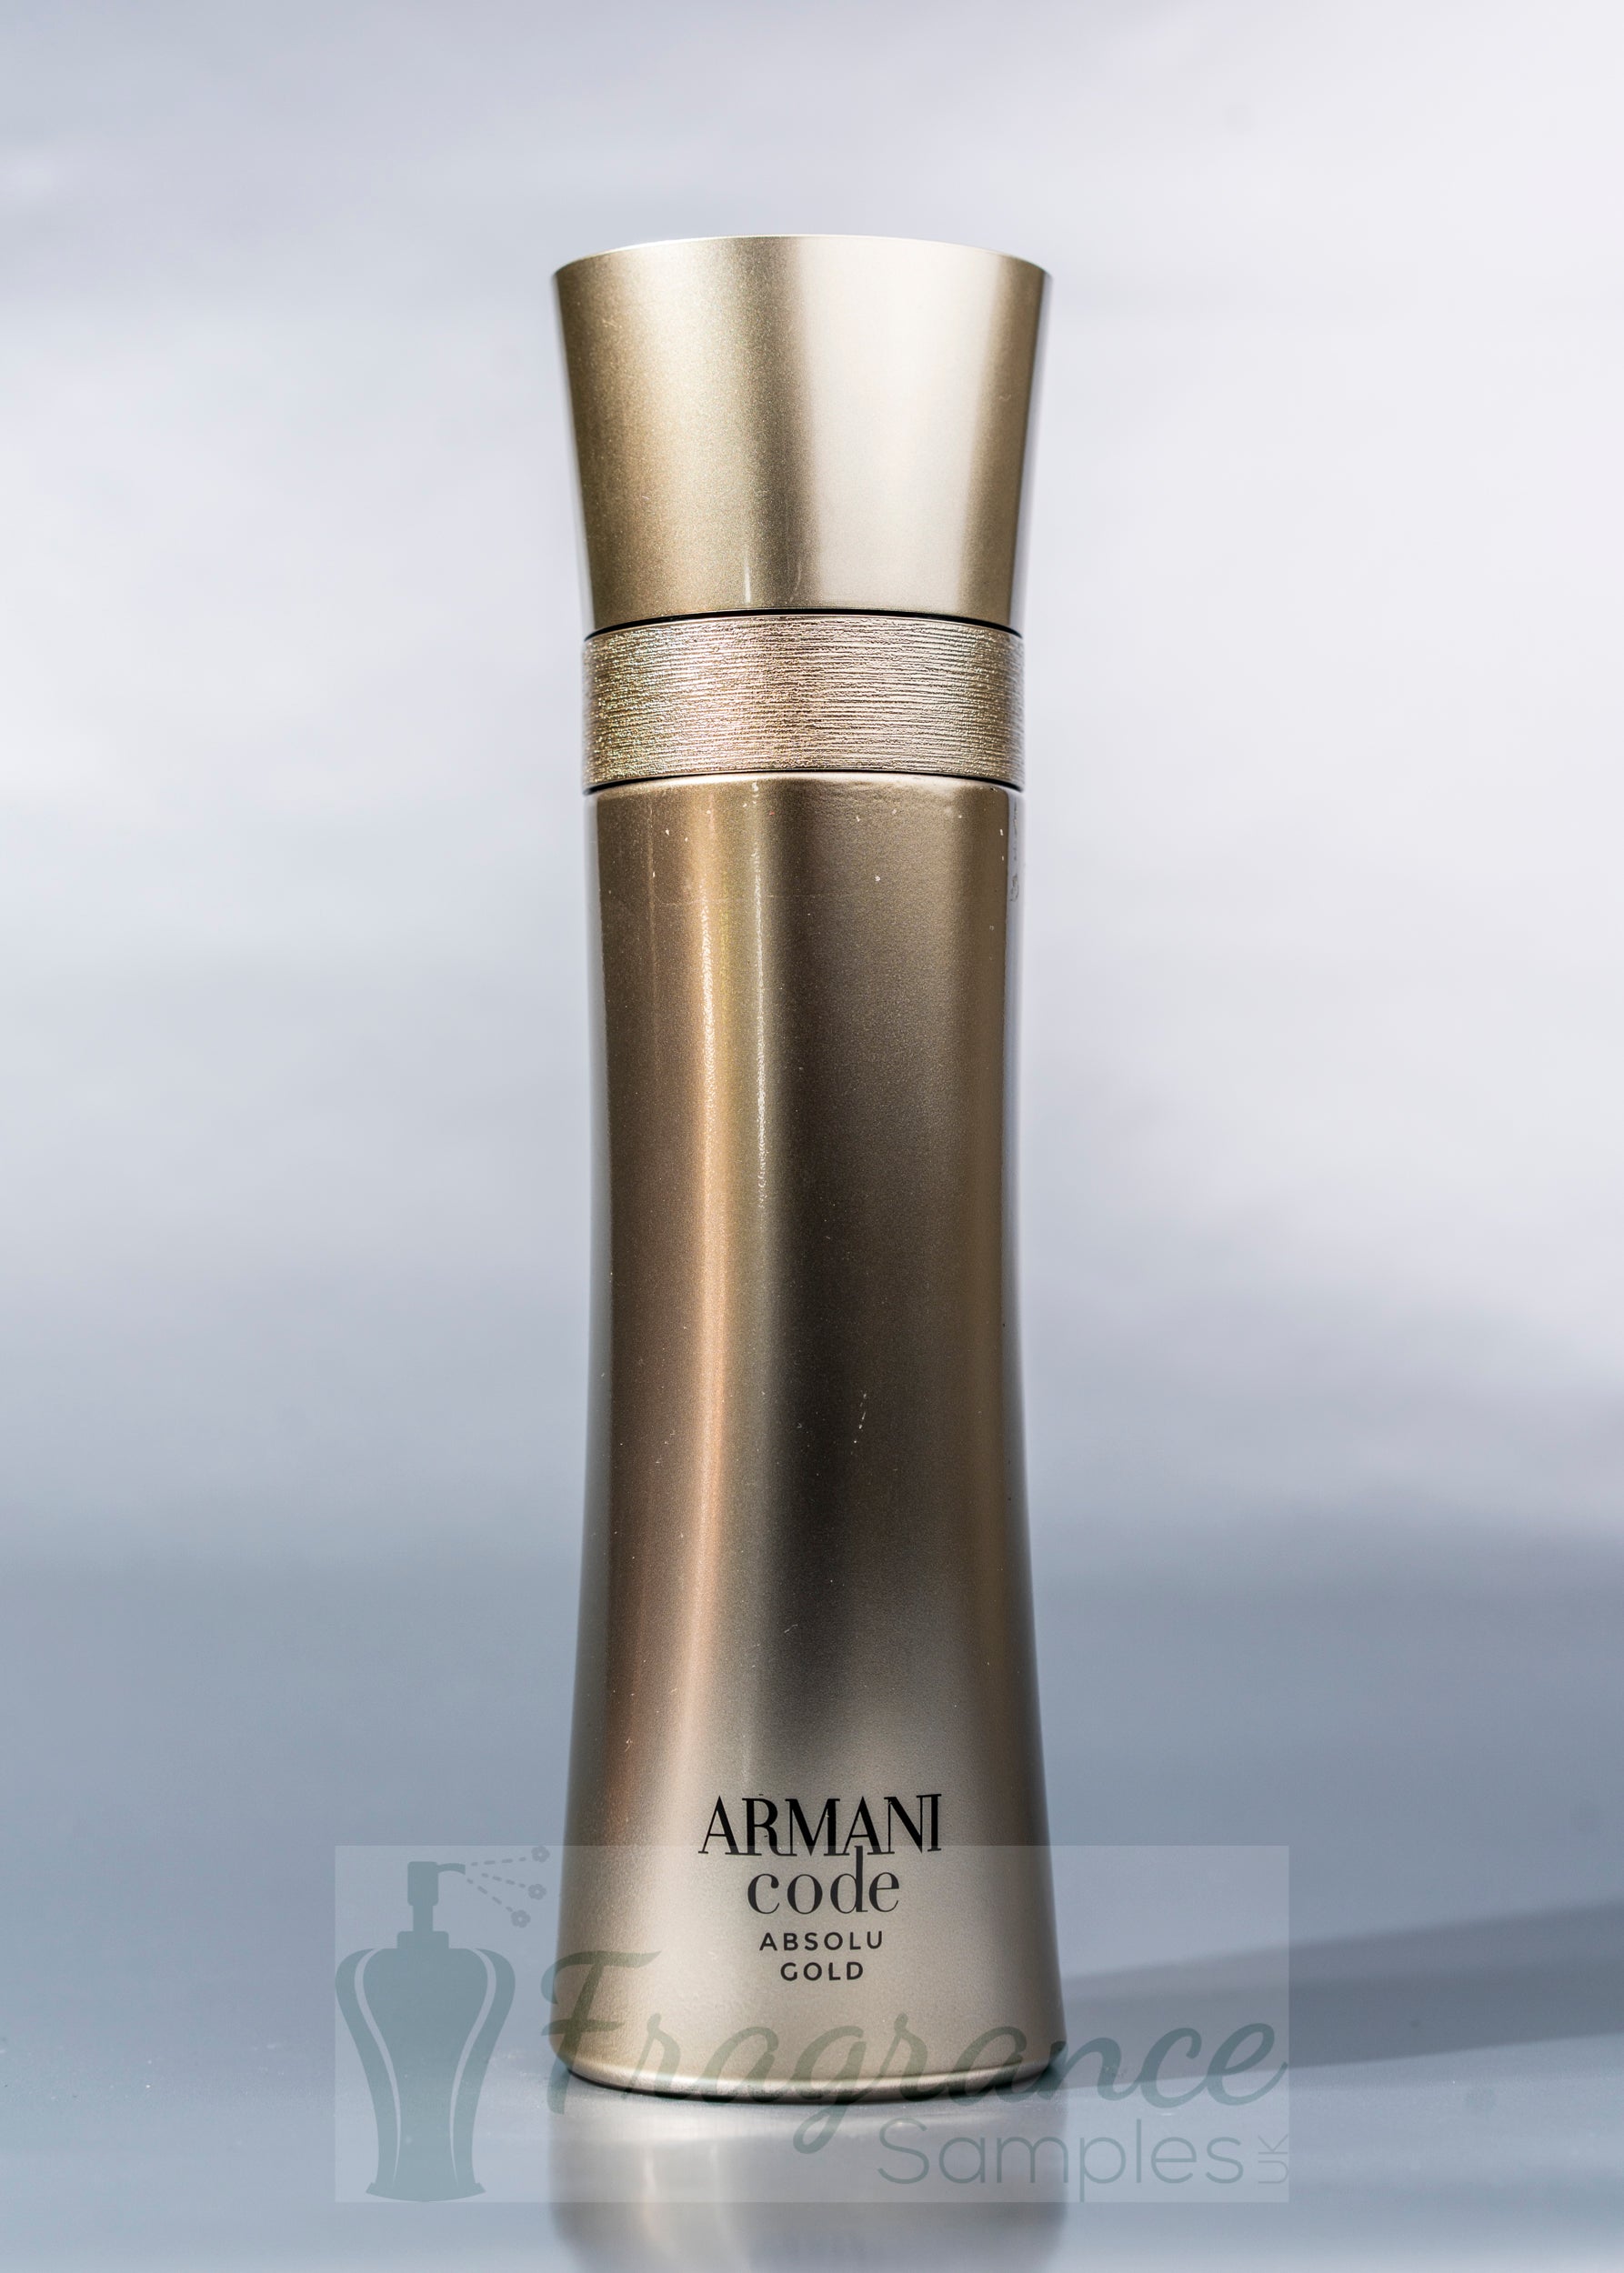 Giorgio Armani Code Absolu Gold – Fragrance Samples UK